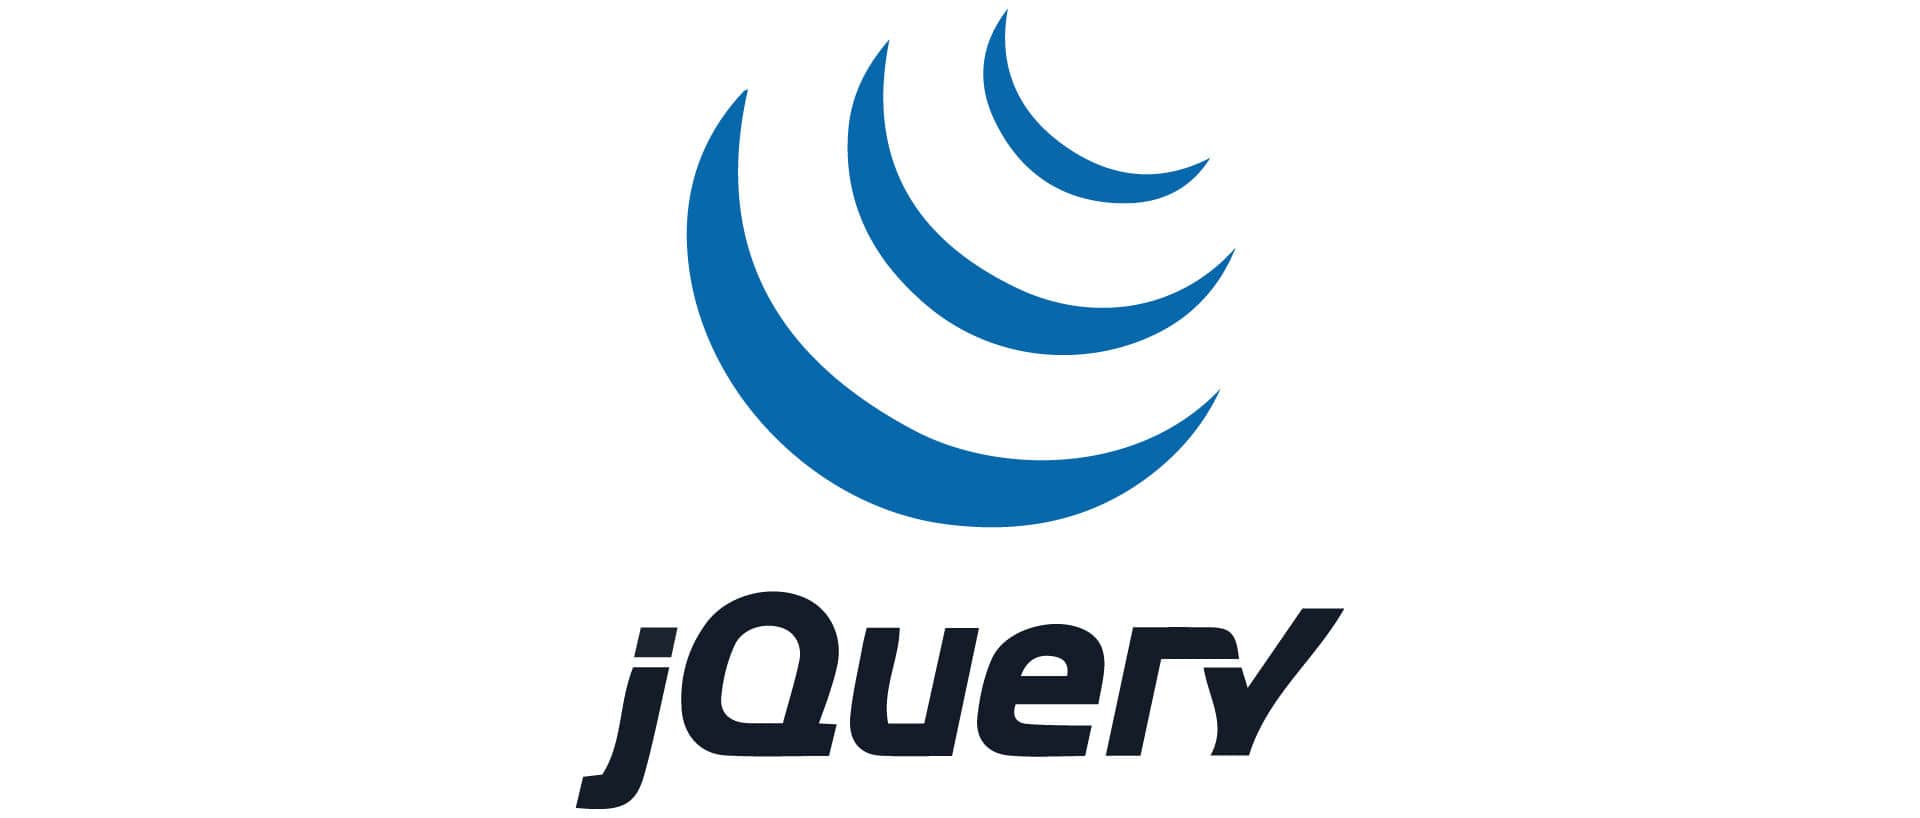 Jquery js. Логотип JQUERY svg. Векторное изображение JQUERY. Векторное лого JQUERY.